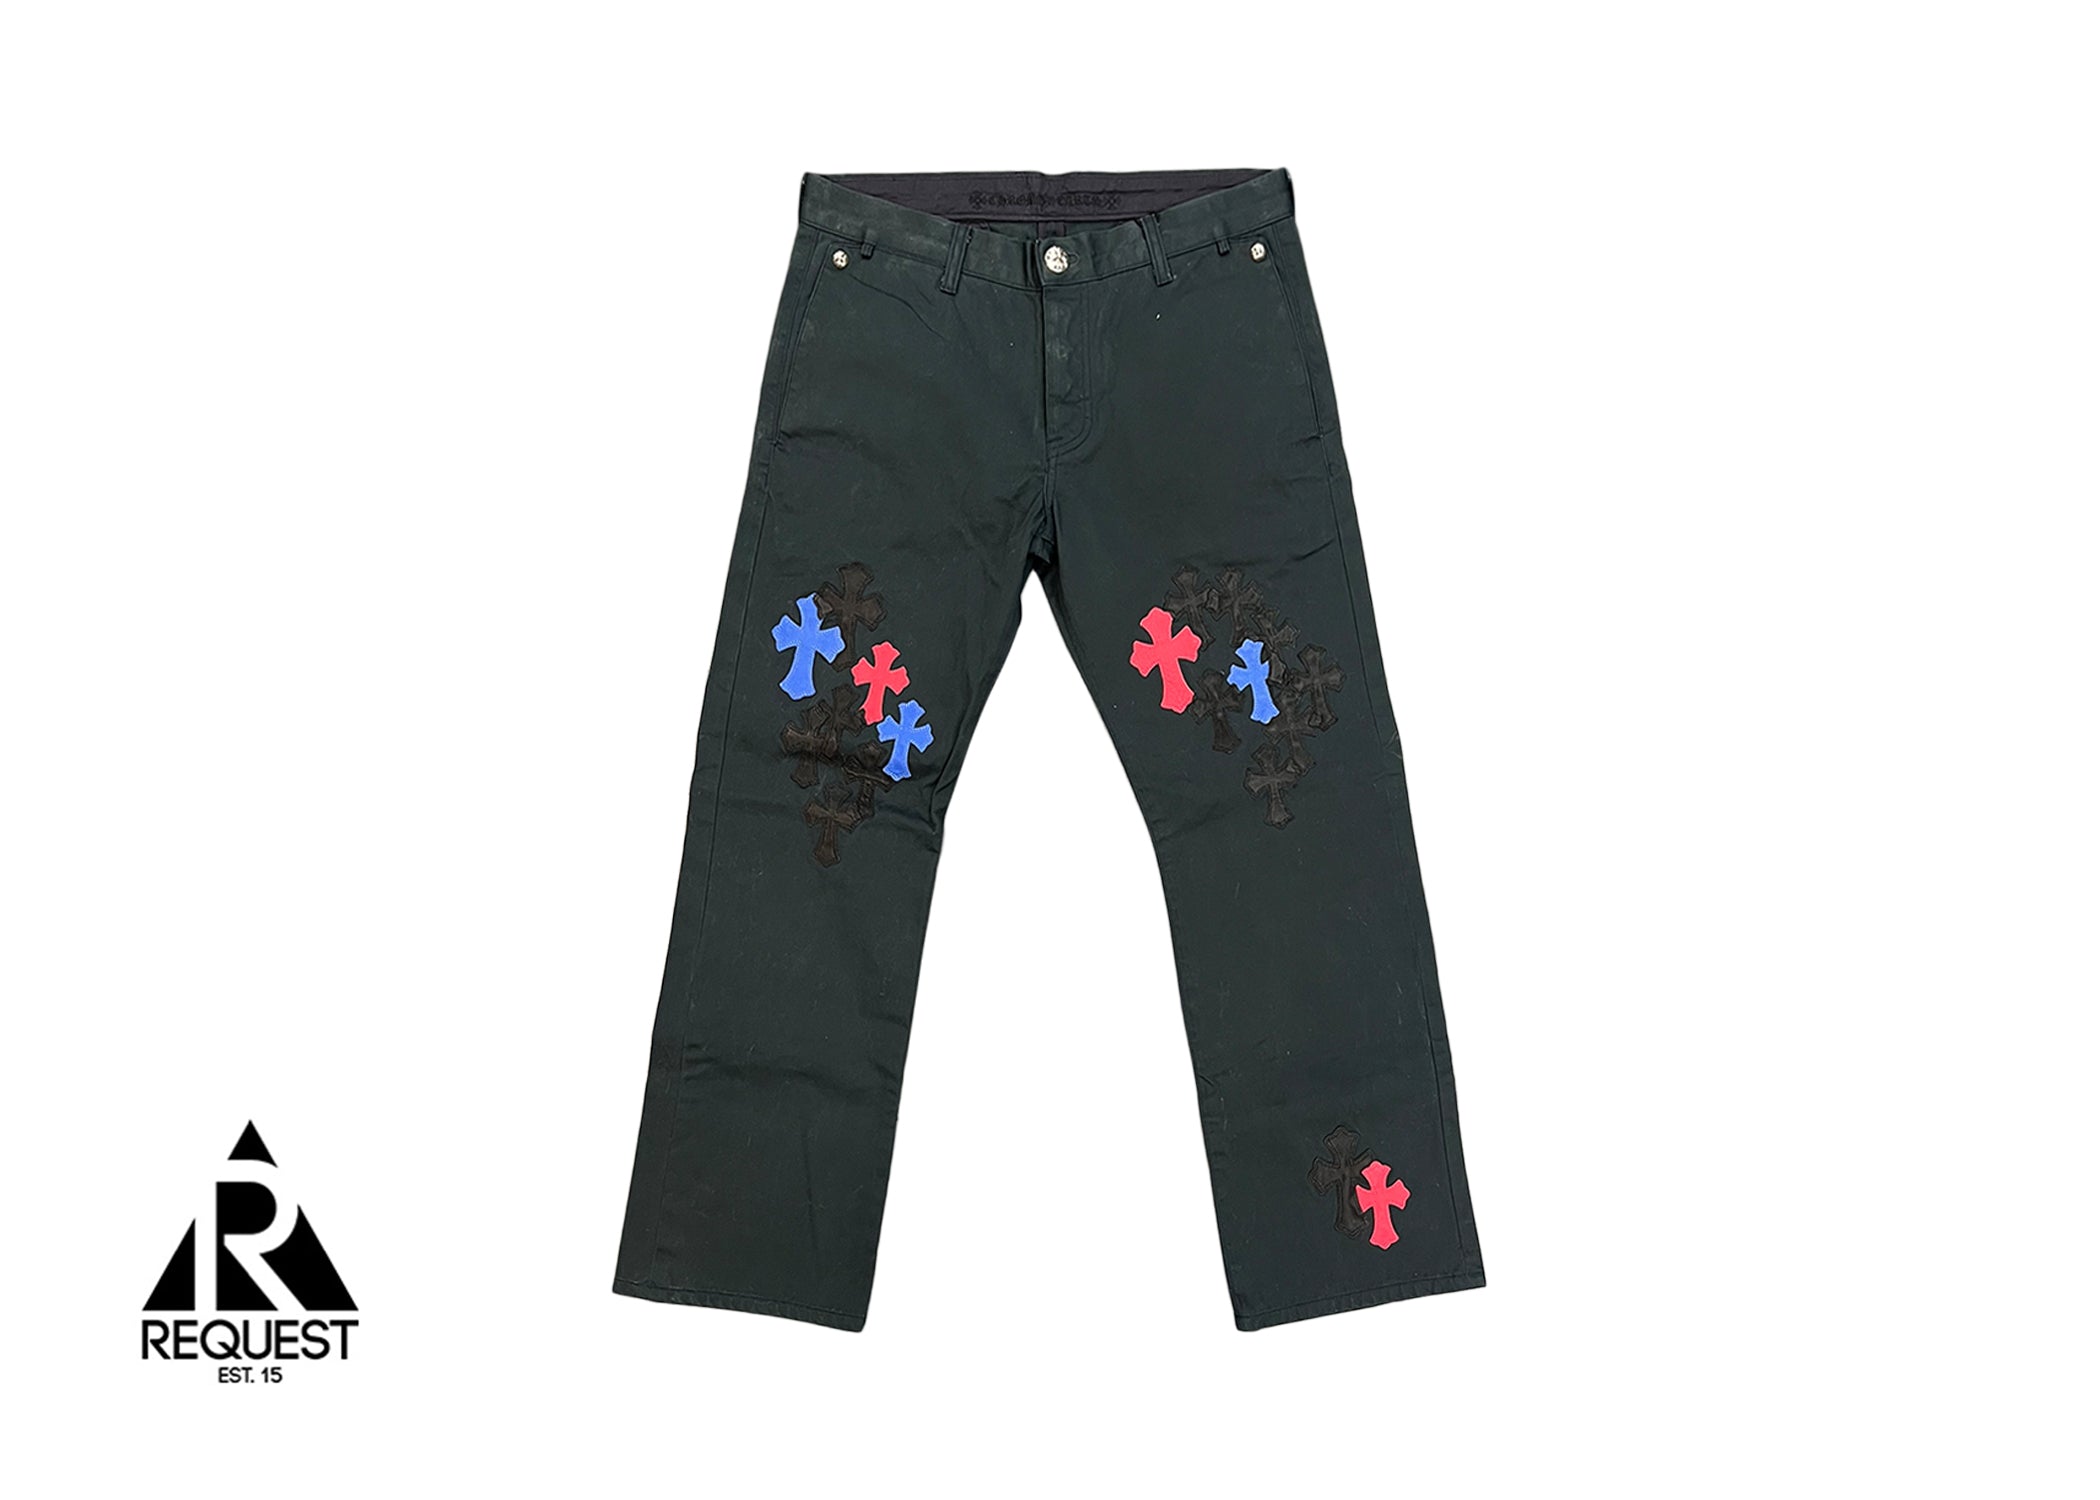 Chrome Hearts Black Chino Pants "Blue Red Black Crosses"